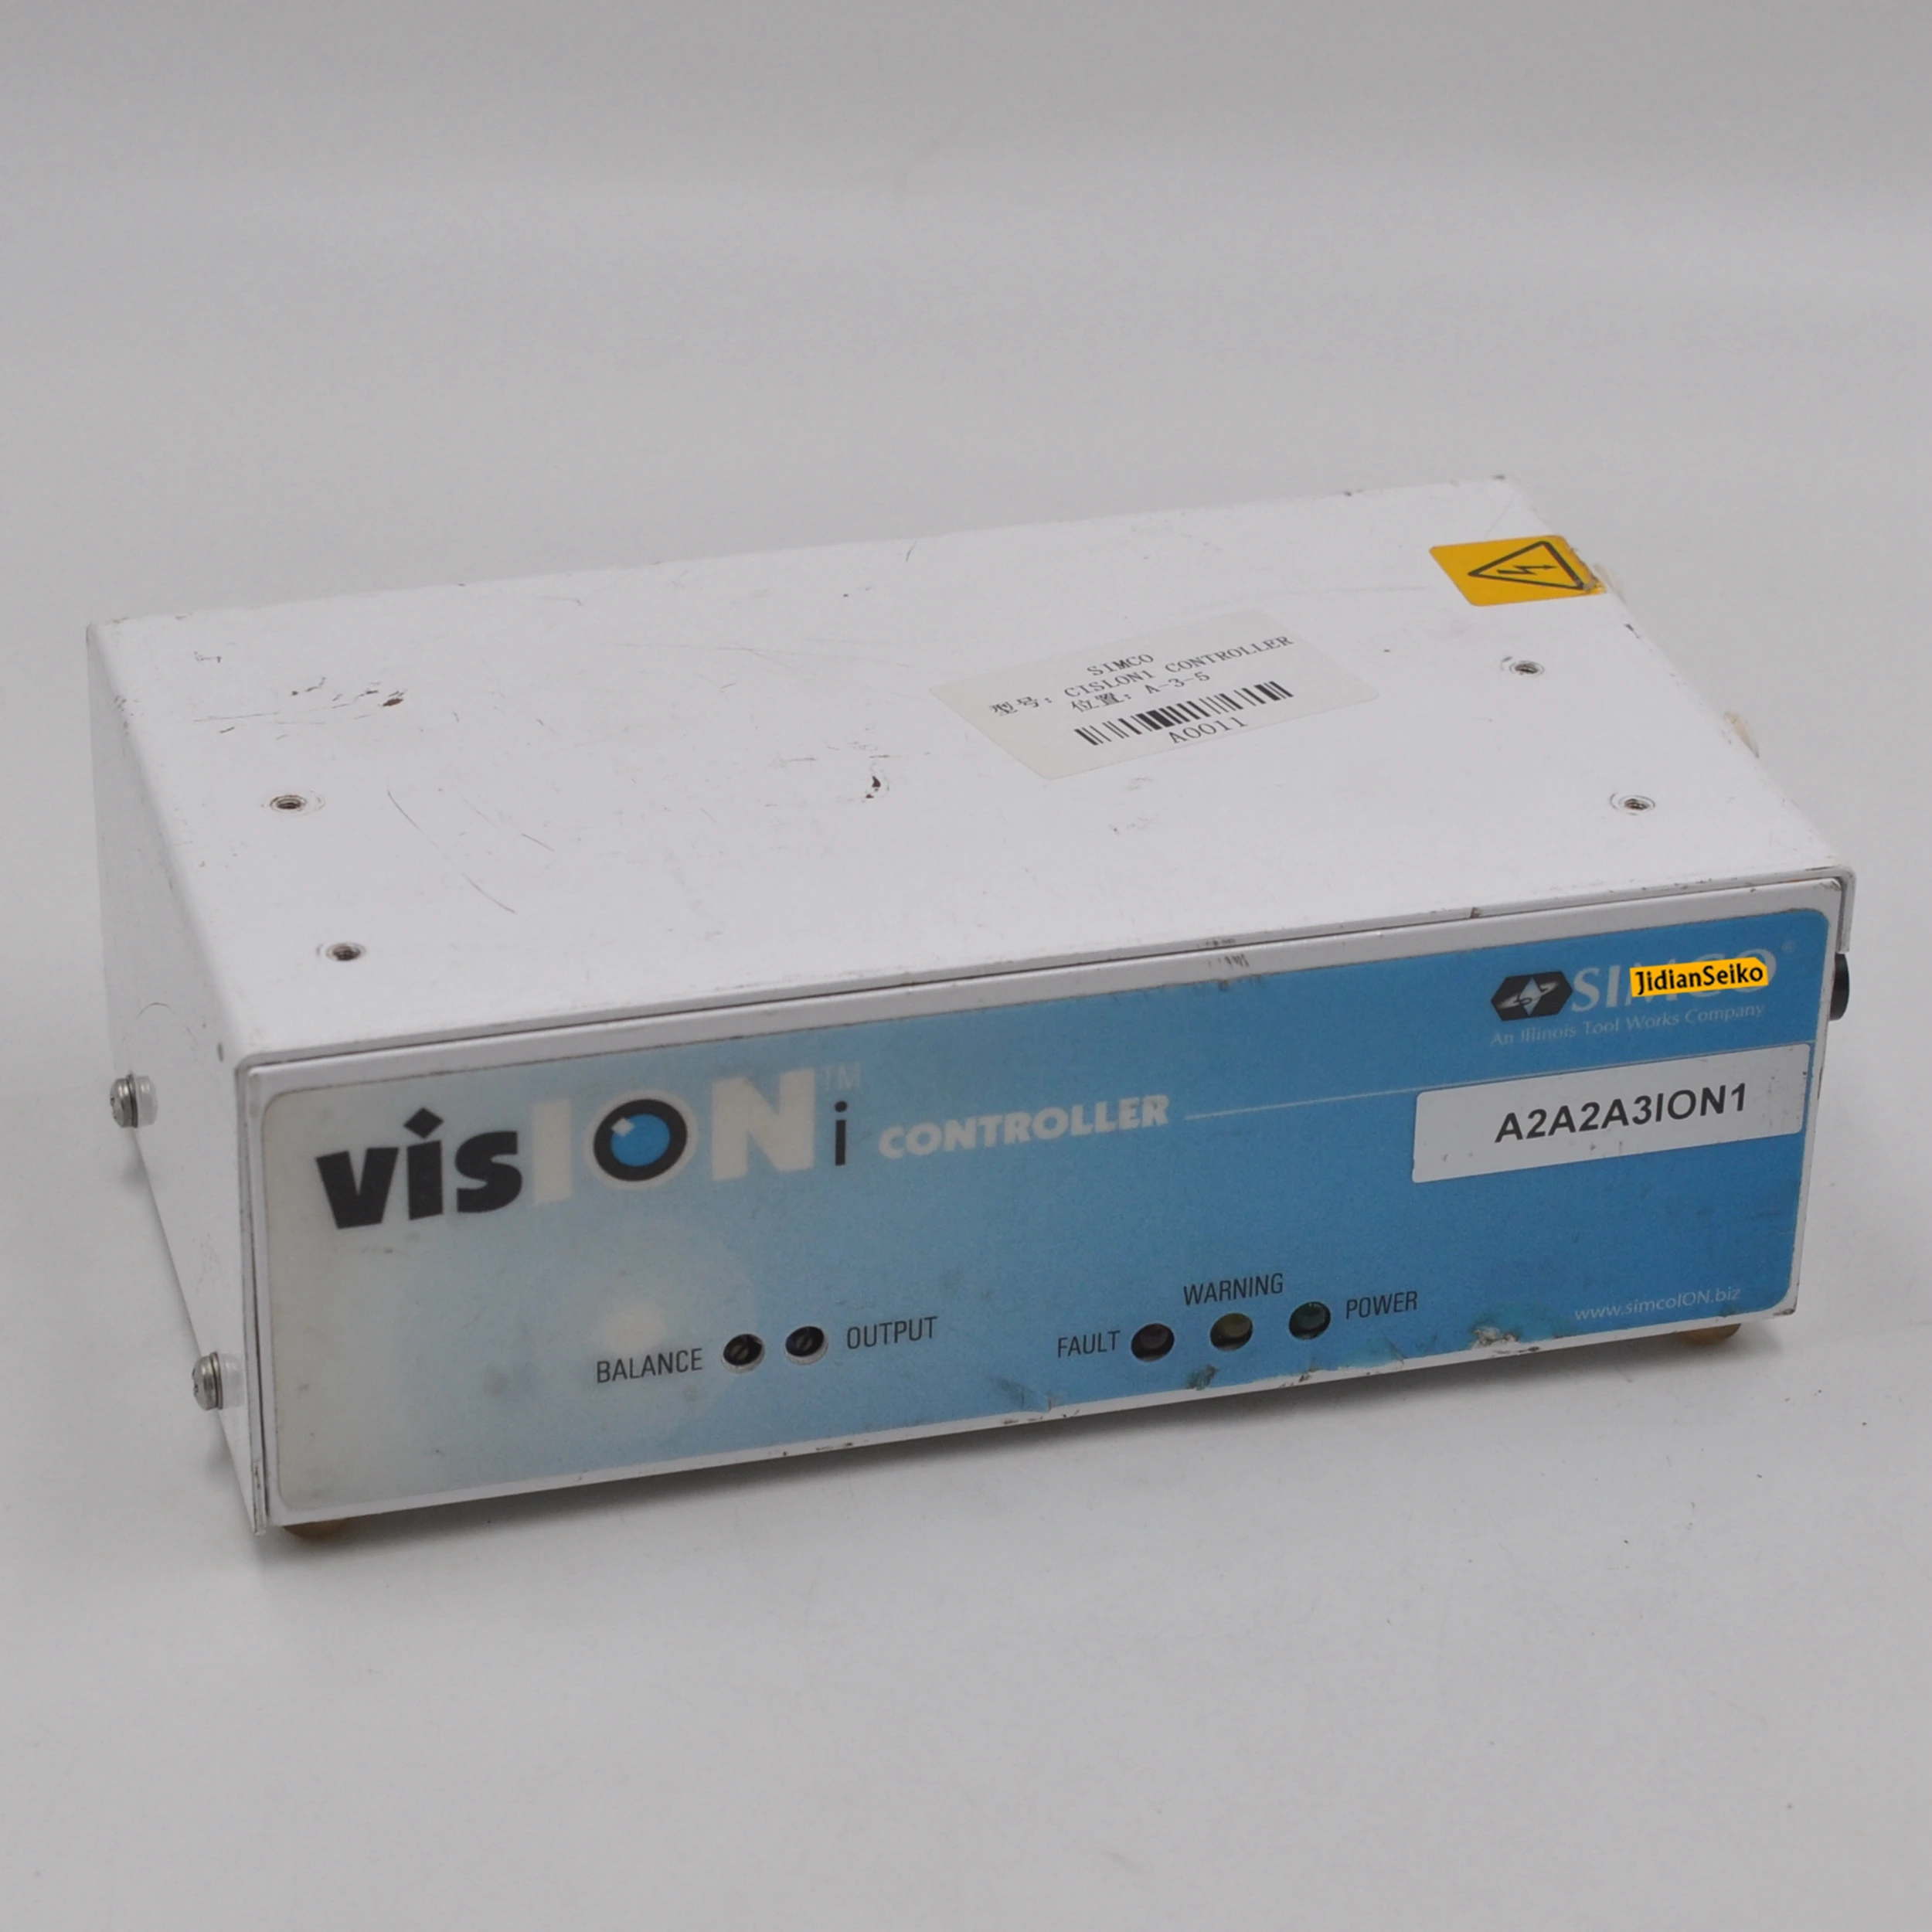 

Vision I controller power supply 100V 50 / 60Hz